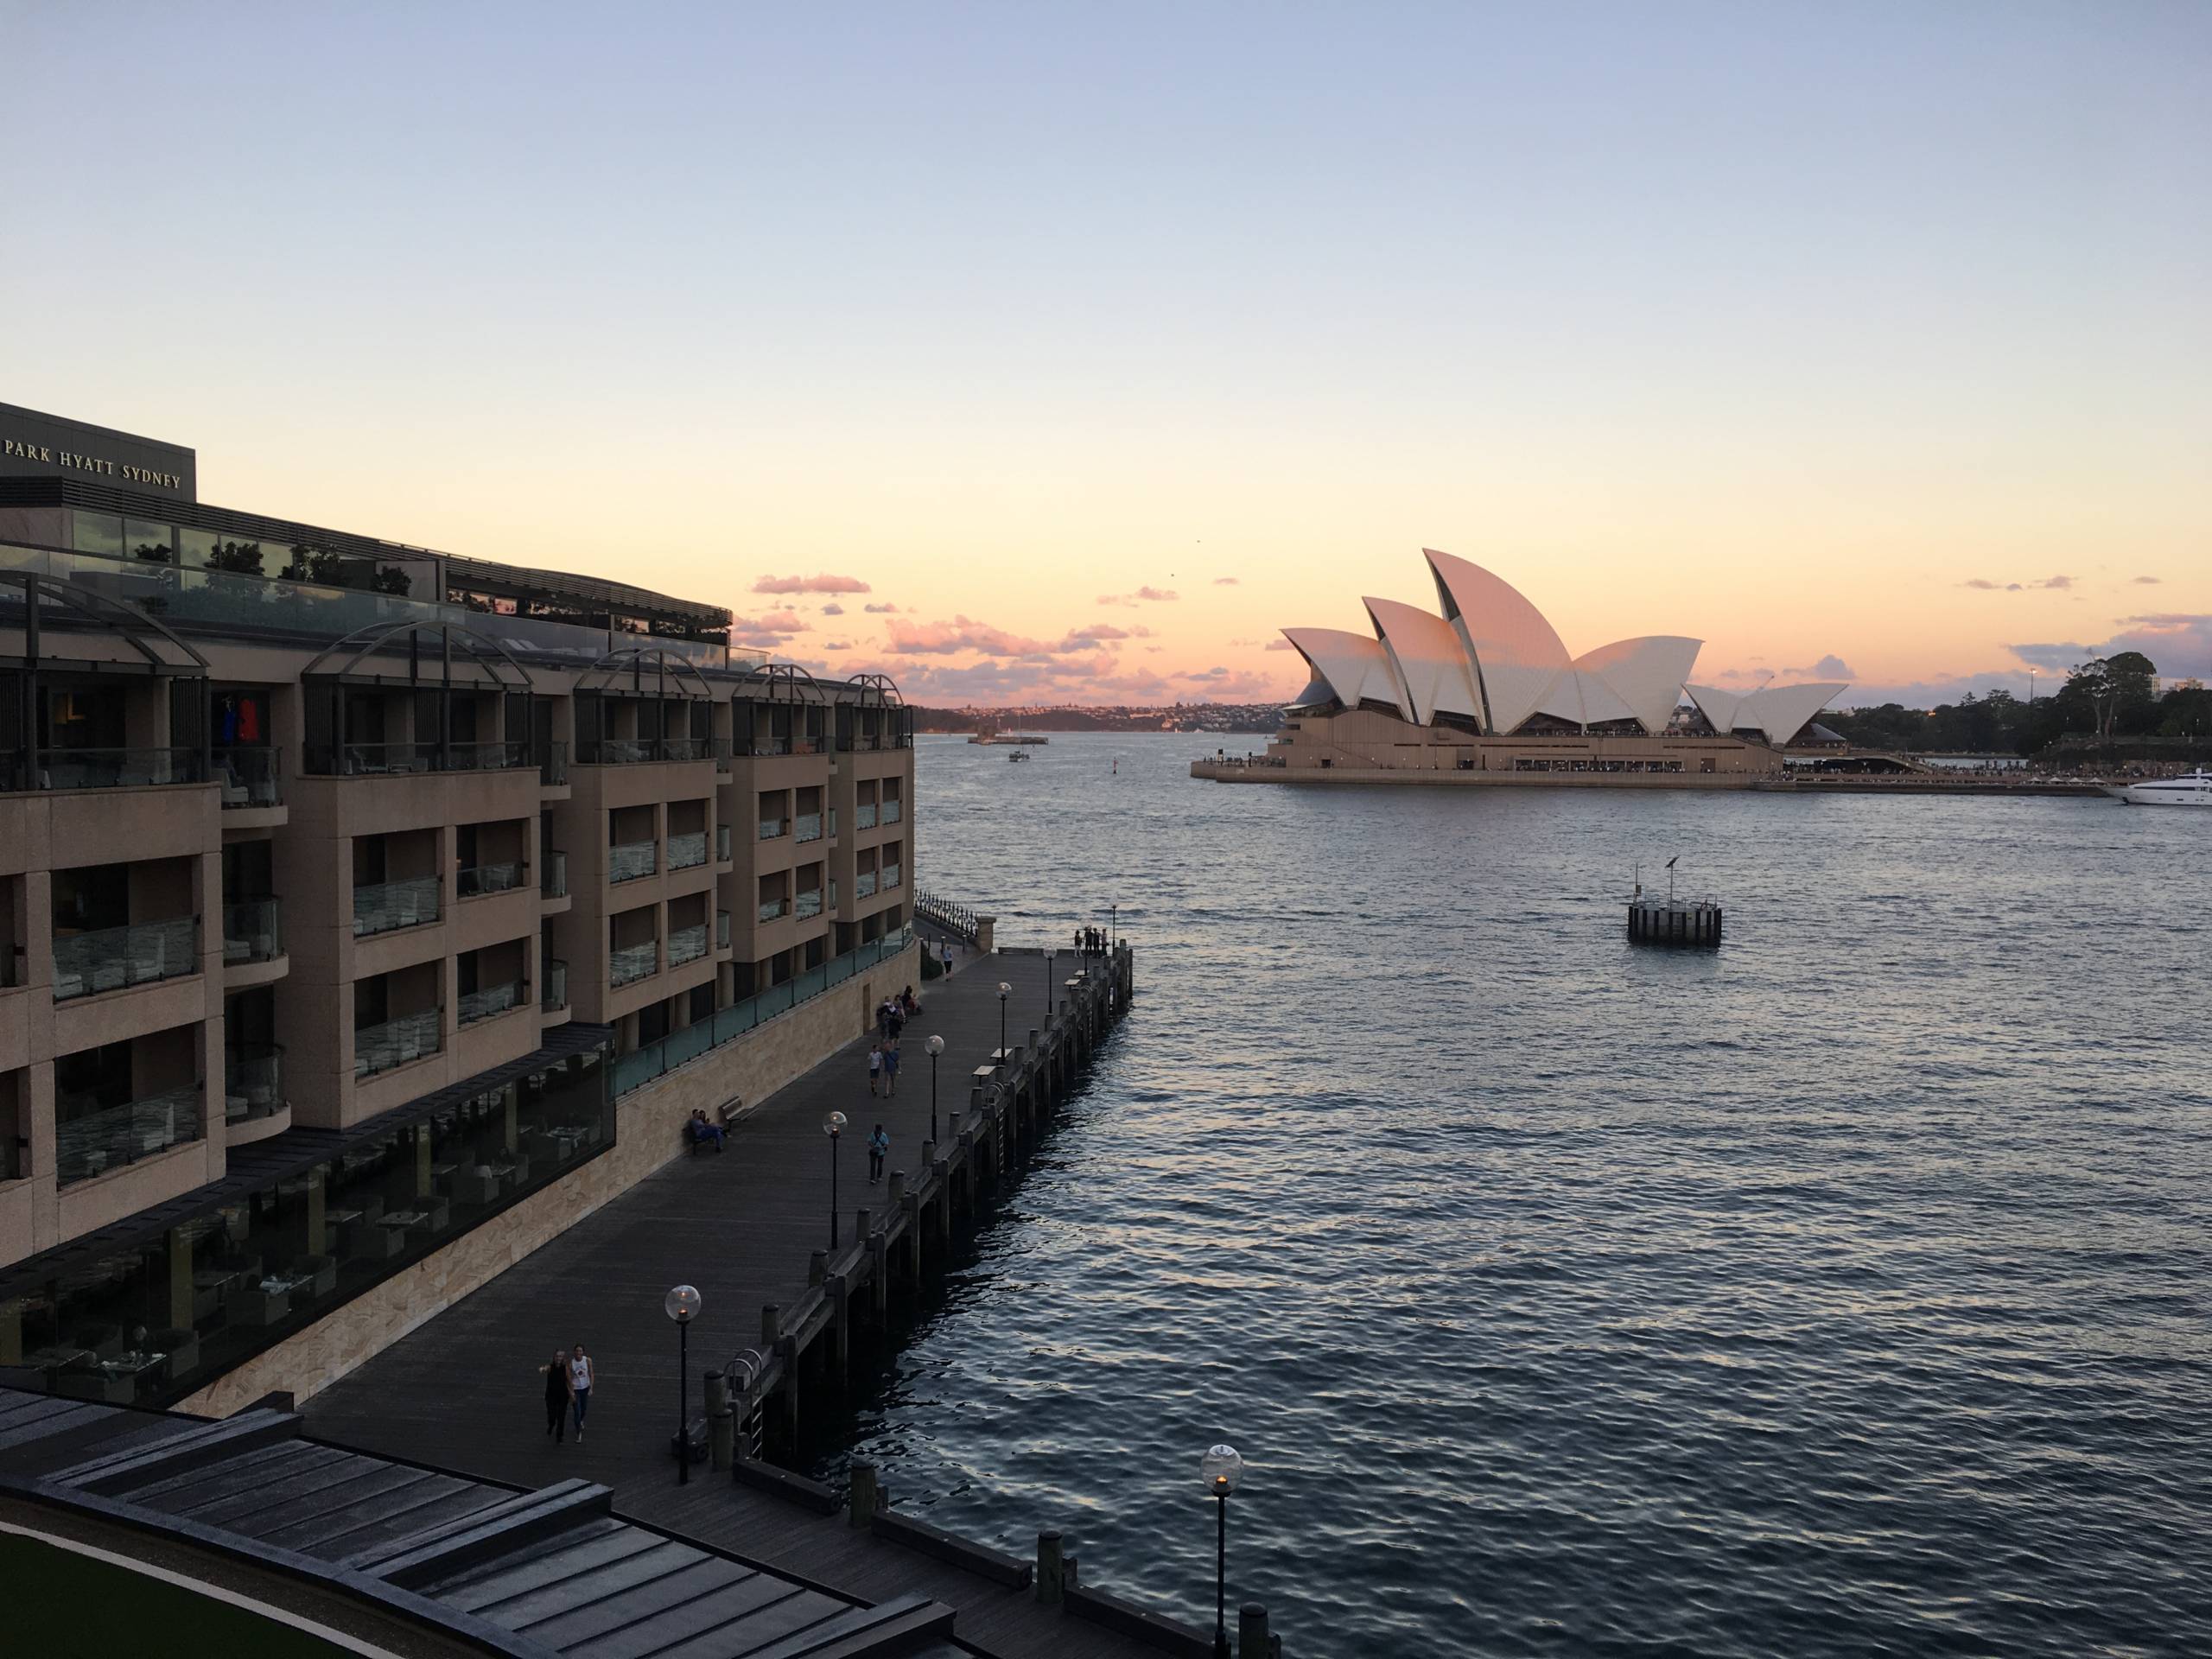 Park Hyatt Sydney February 2018. (Photo by Clint Henderson:The Points Guy)